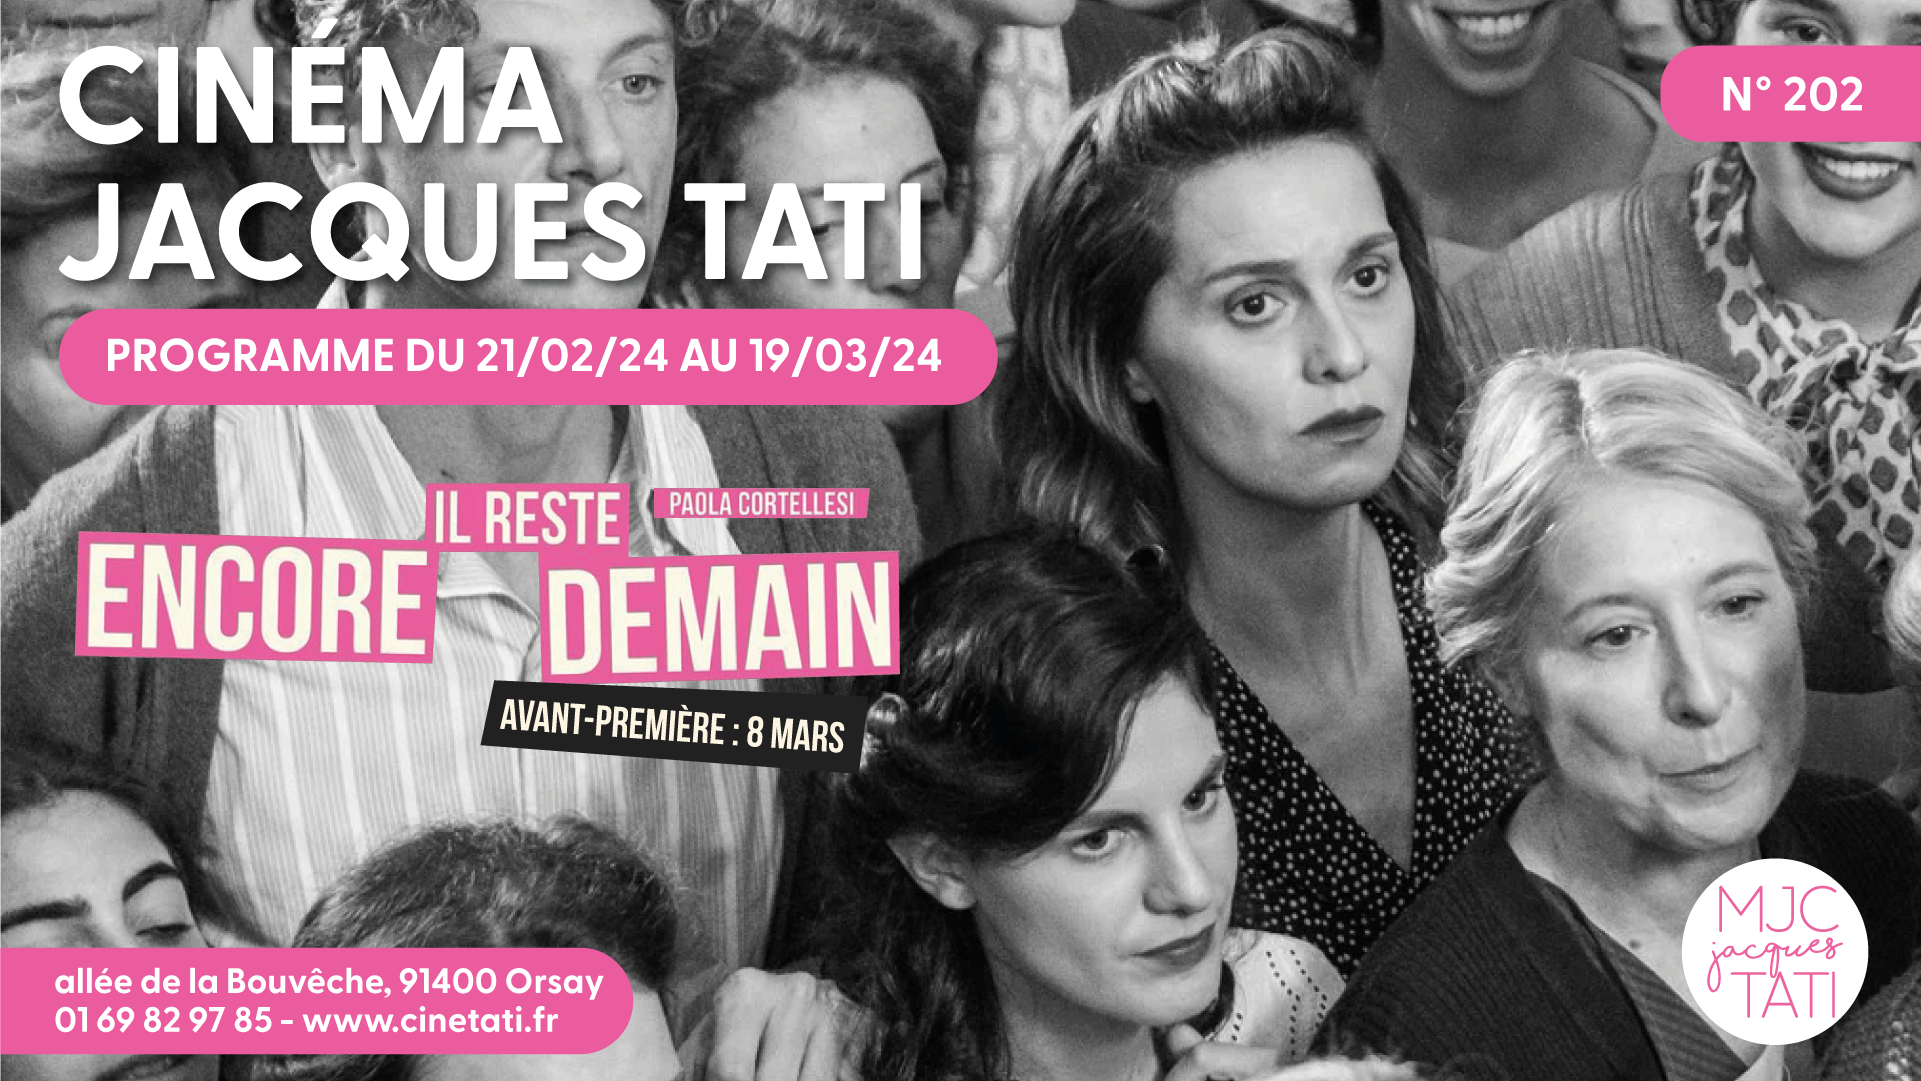 Programme du cinéma Jacques Tati à Orsay - n°202